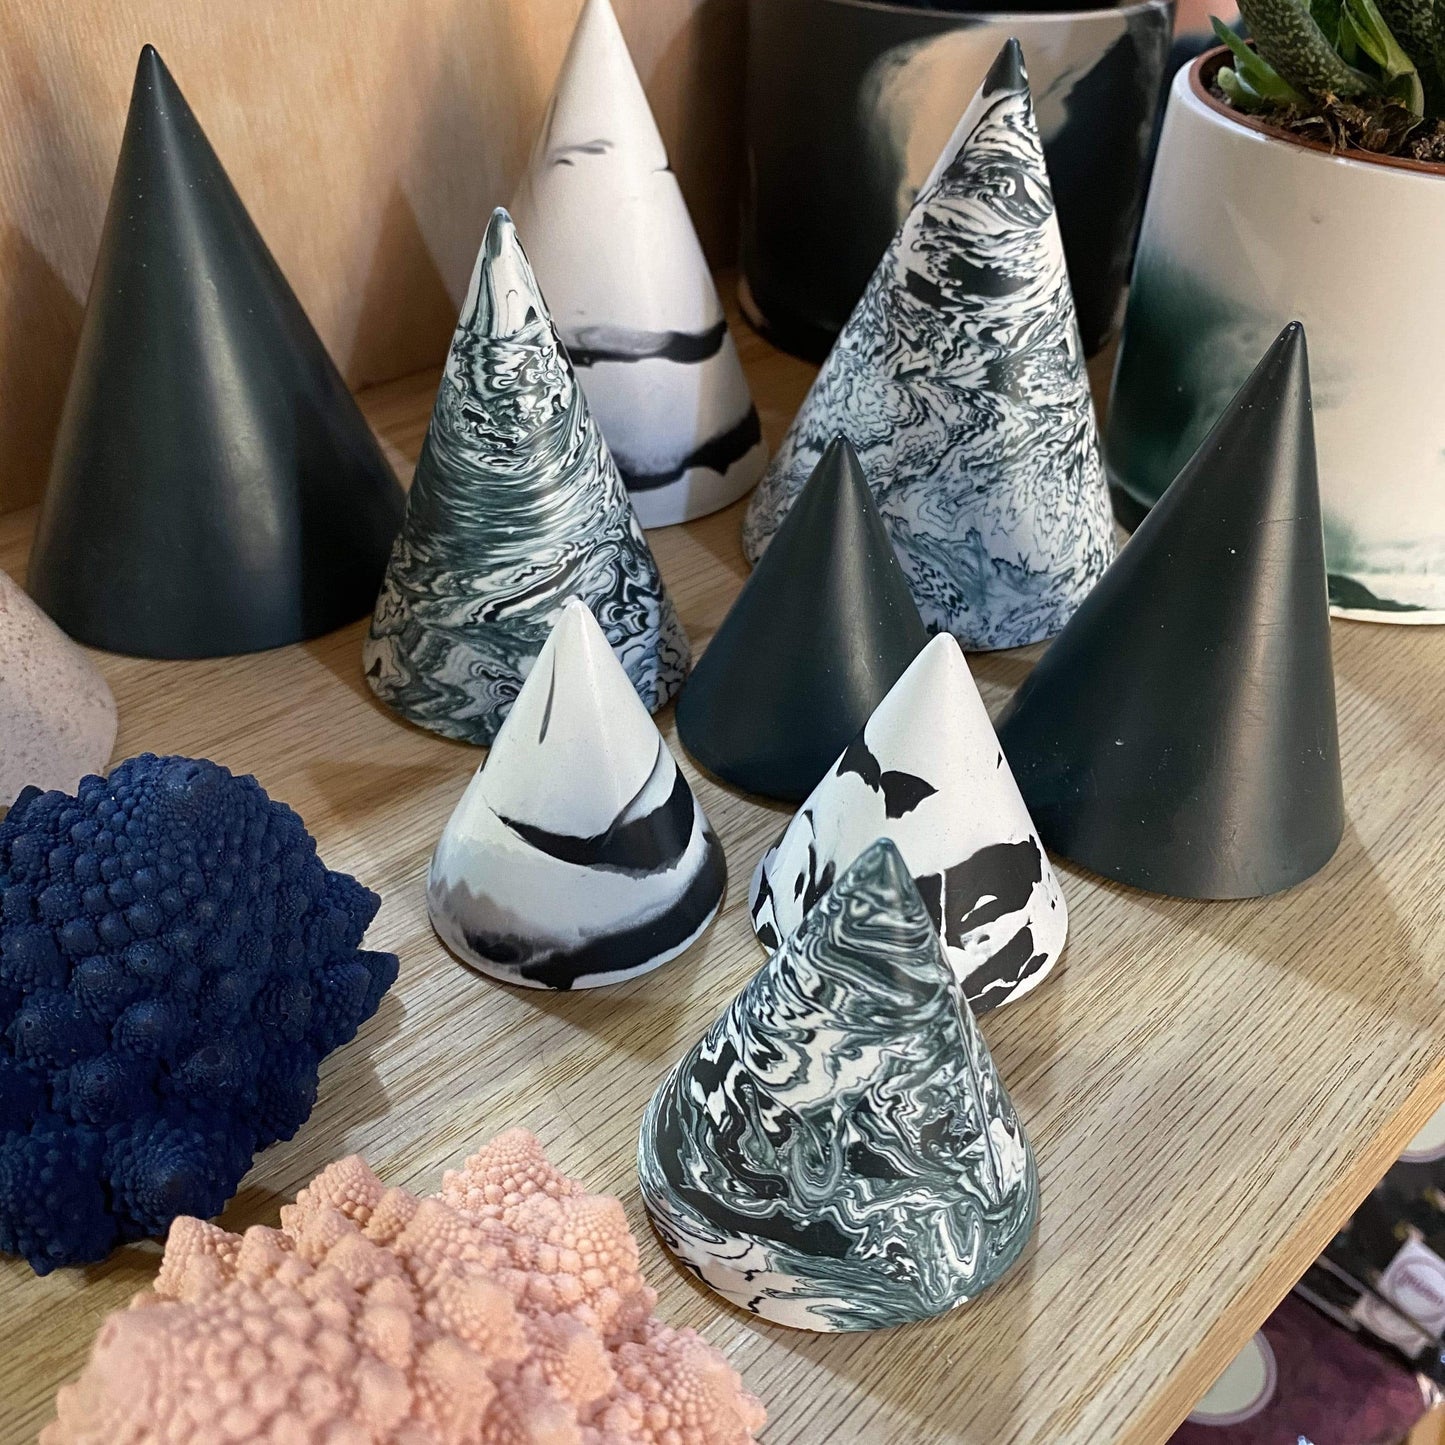 Tip Studio Cones Small cone - Green/White Swirl Jesmonite Cones  (various sizes and patterns)